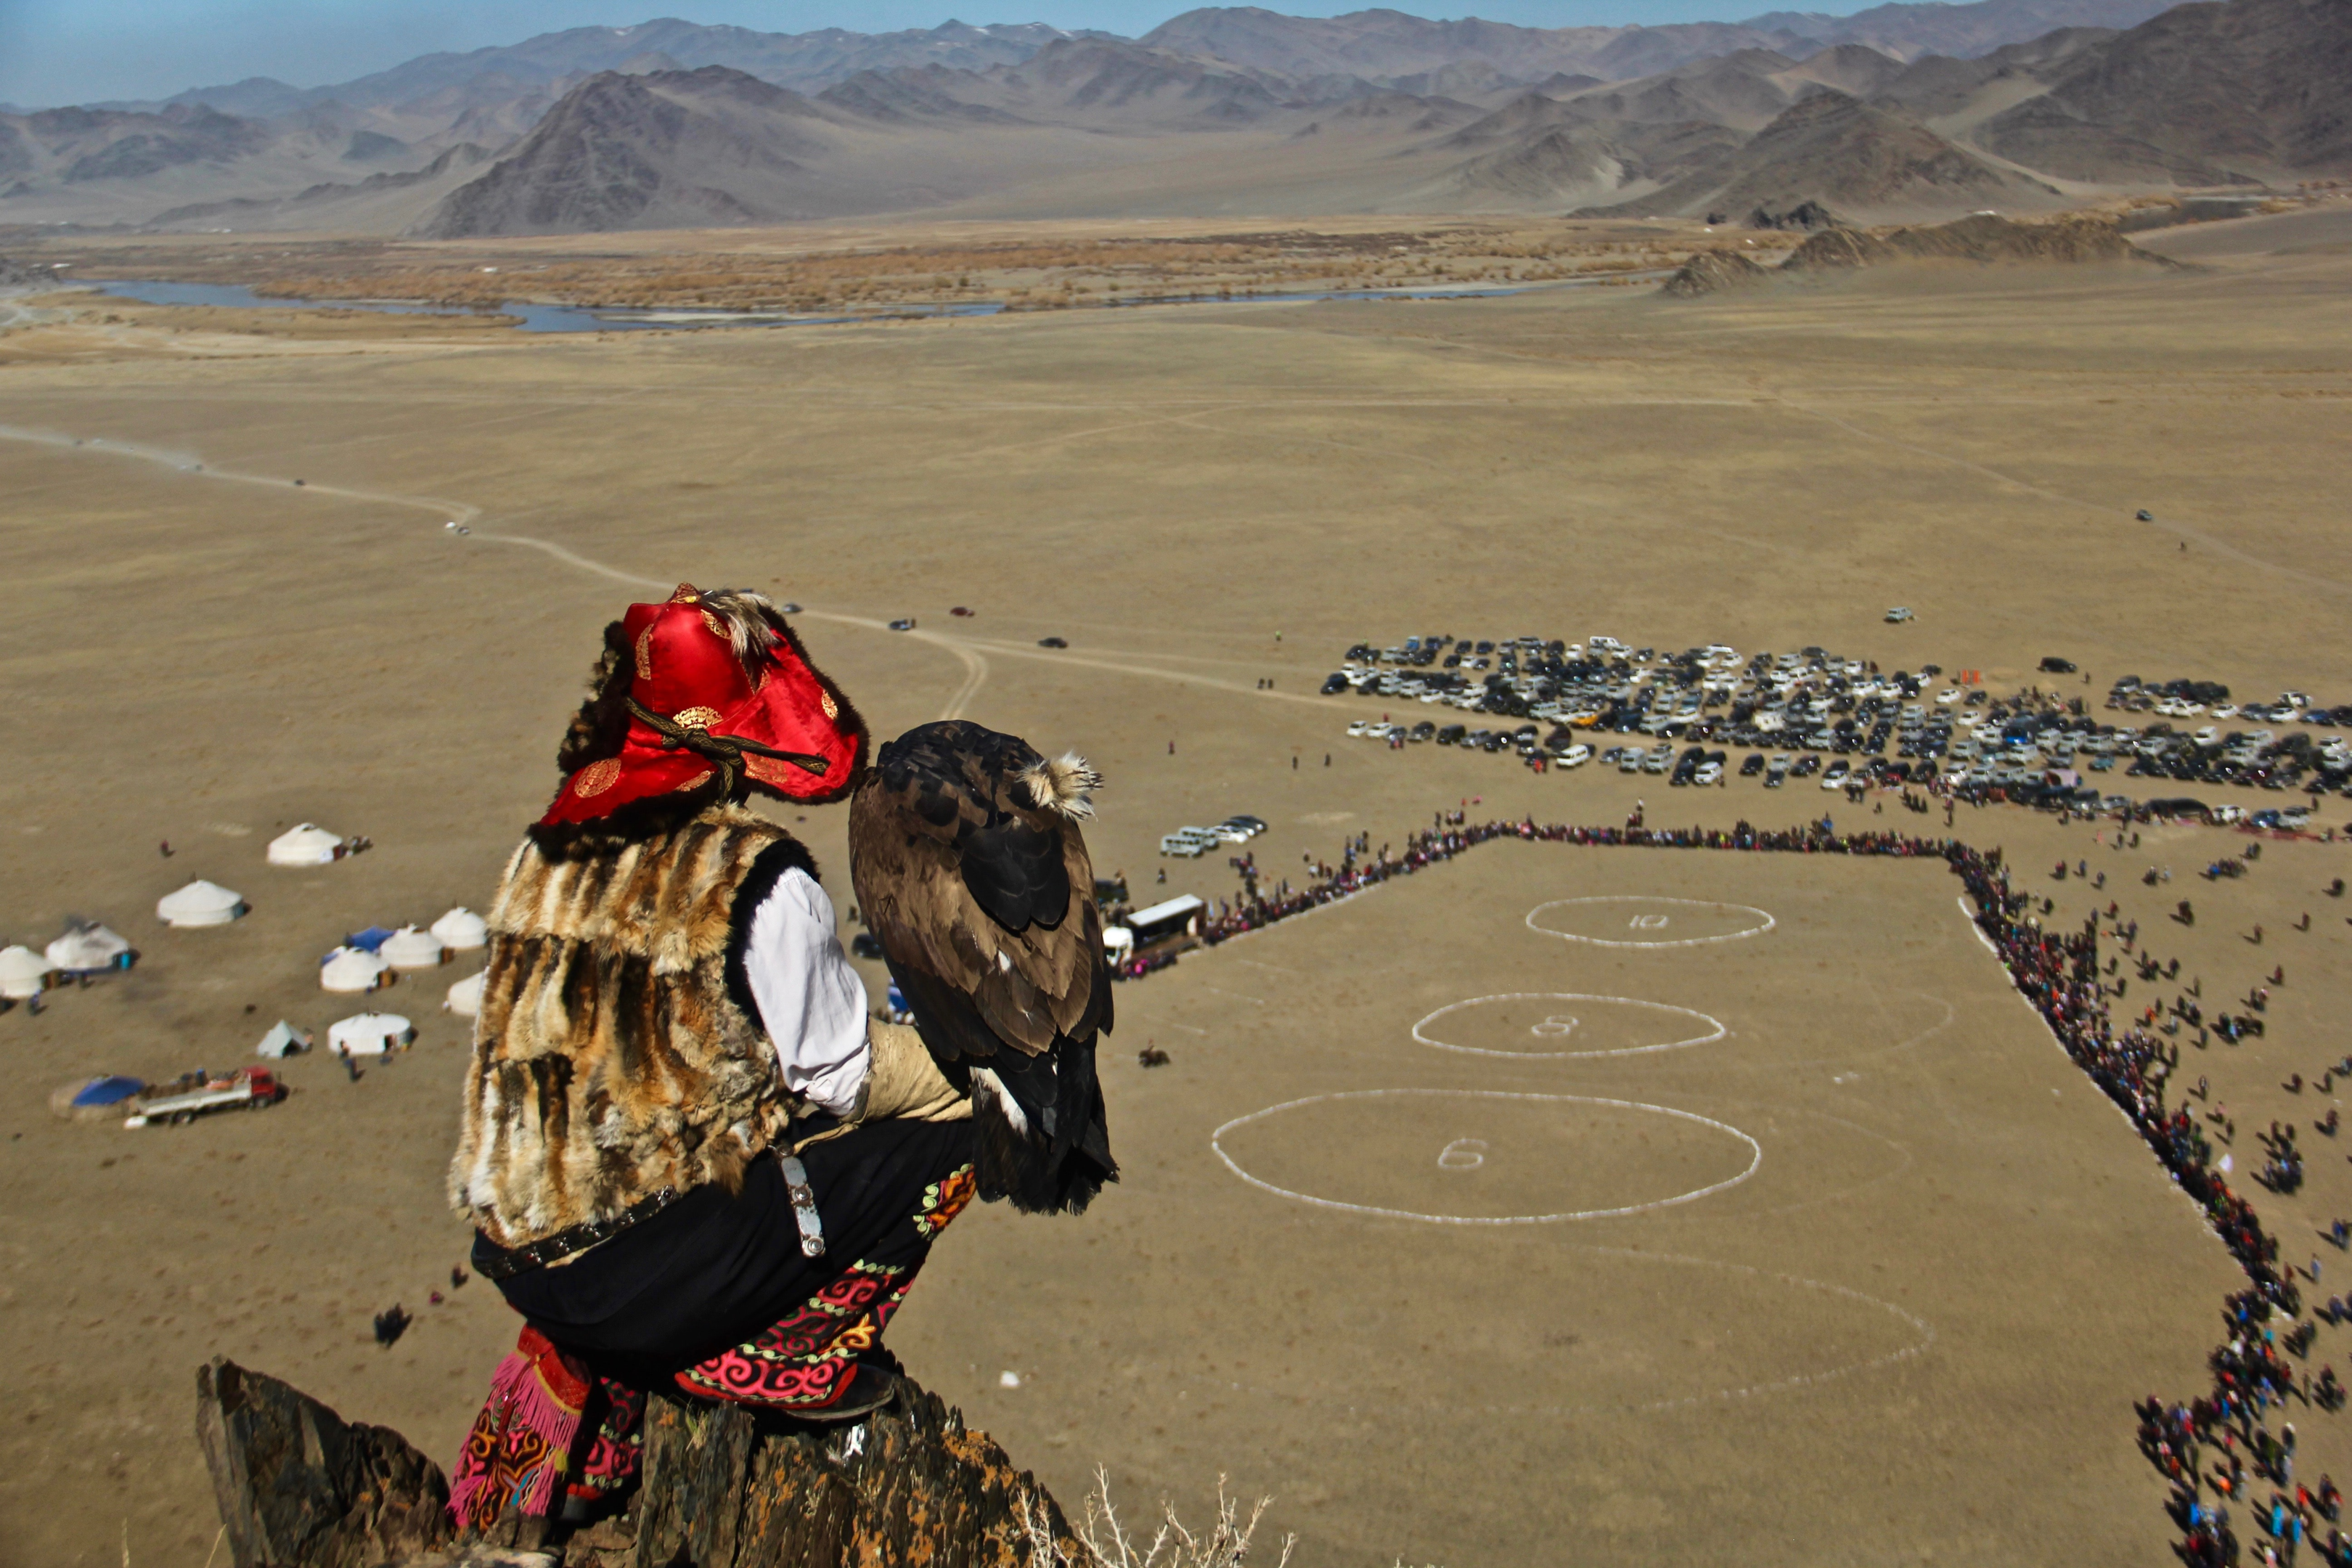 The golden eagle festival in Mongolia